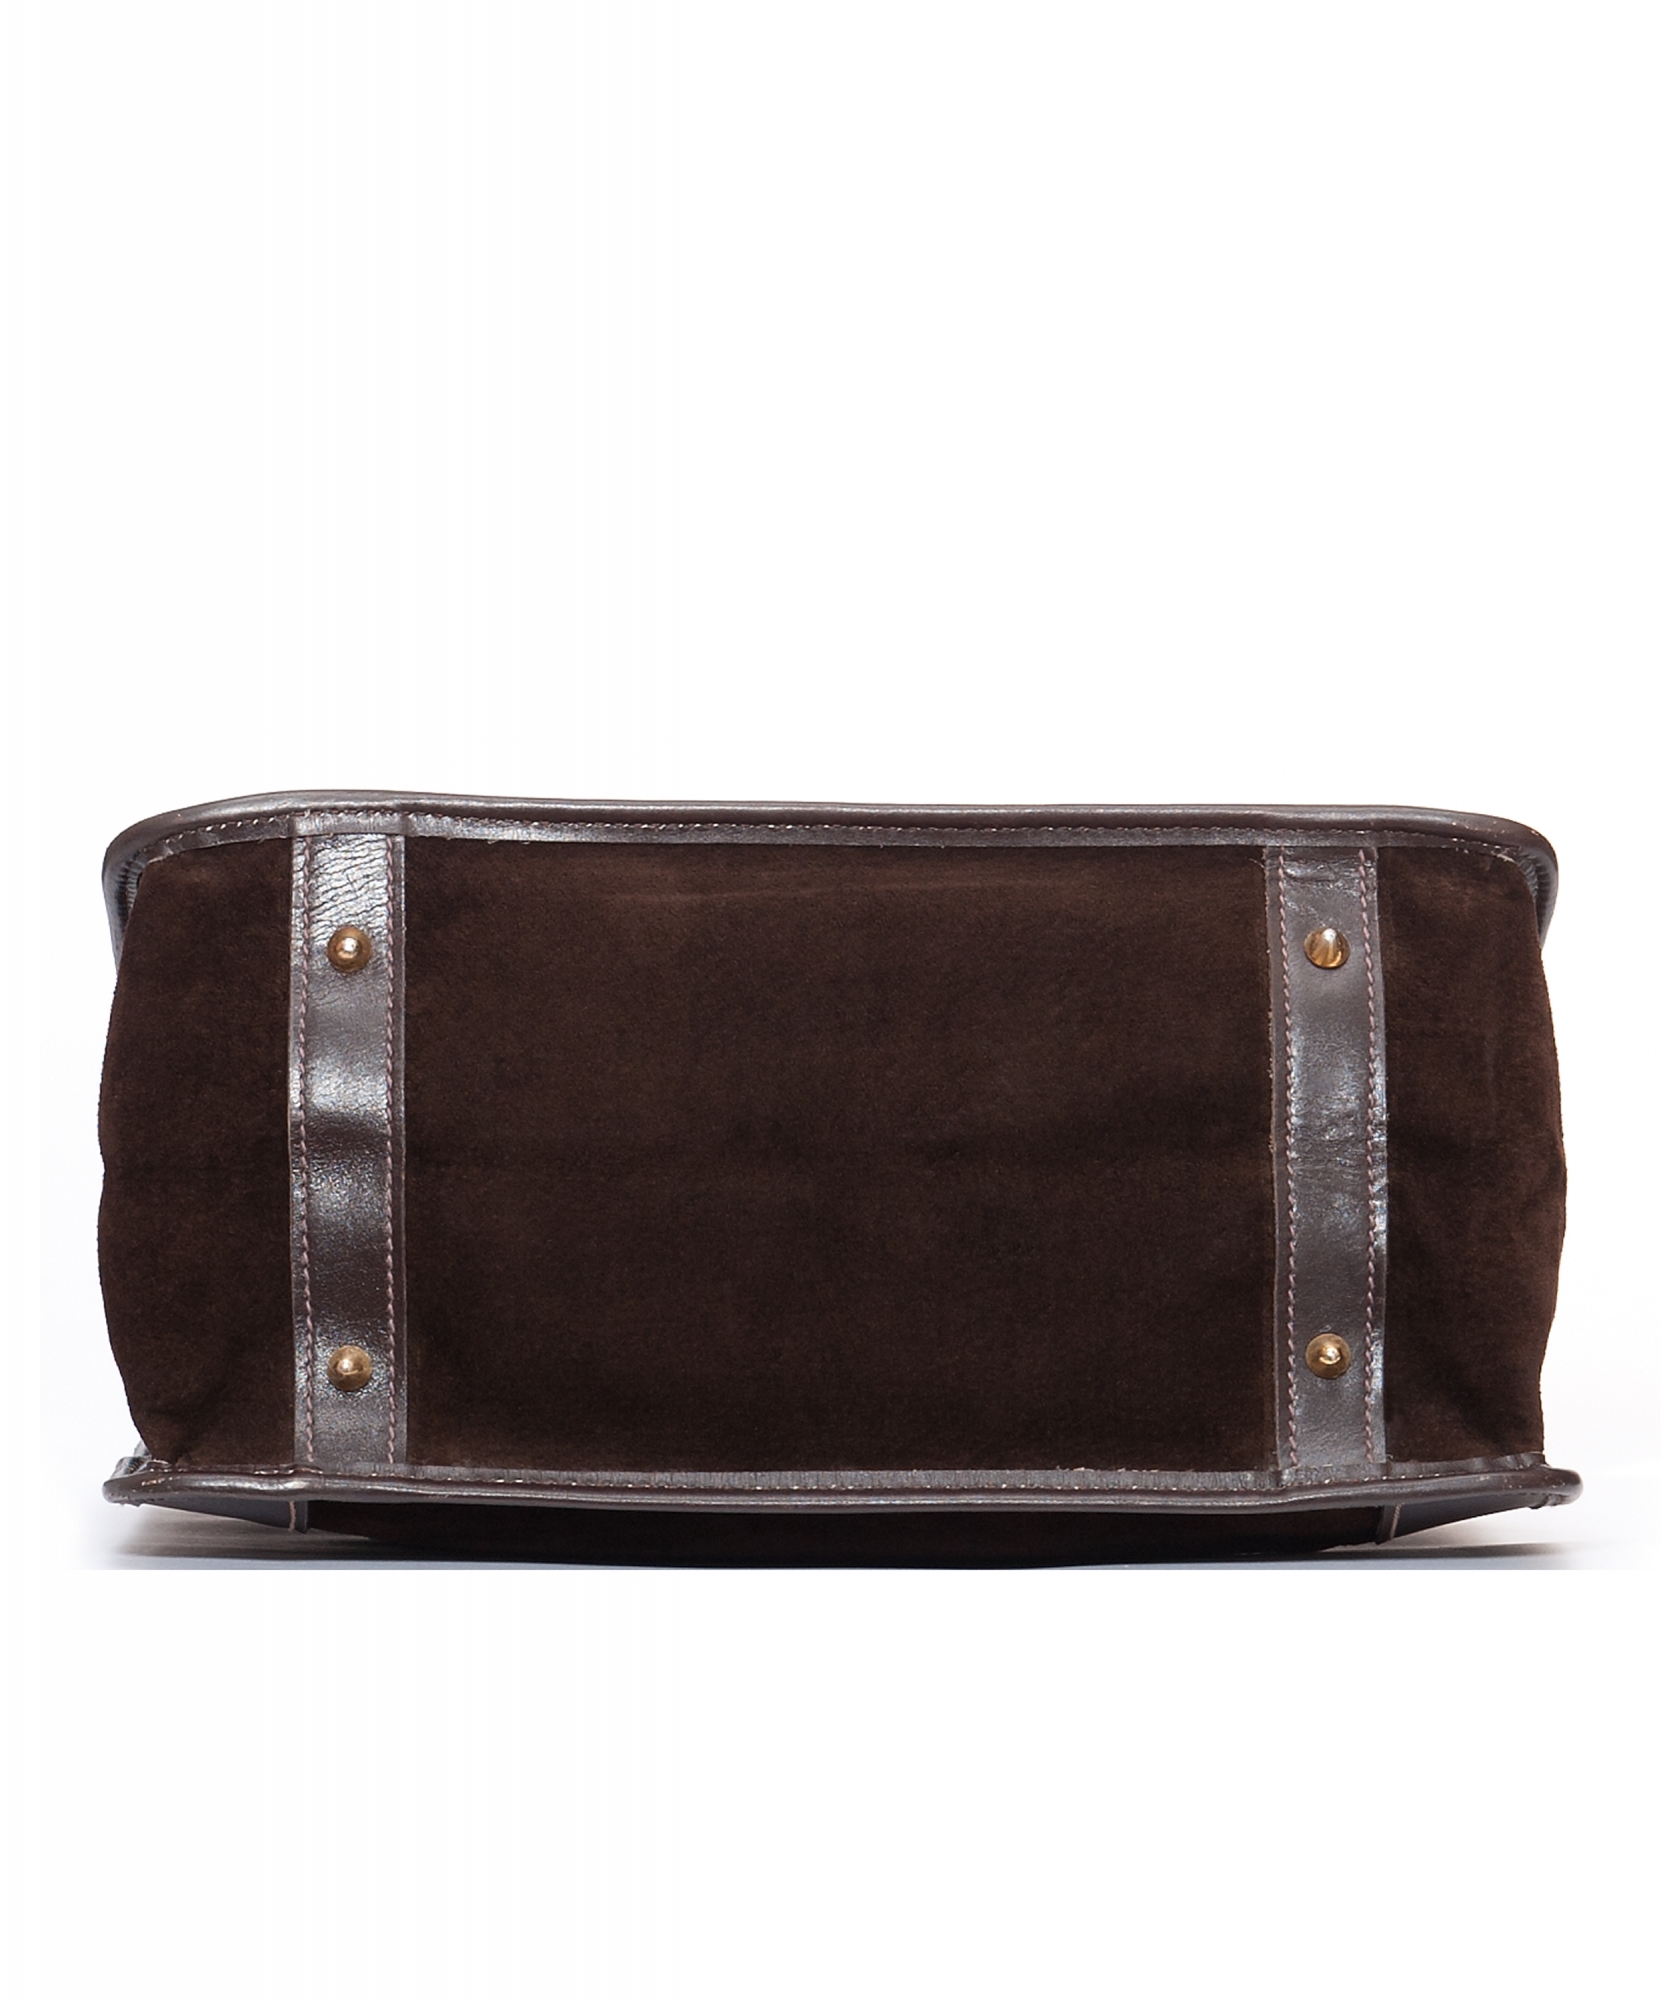 Gucci Brown Suede Leather Handbag | La Doyenne